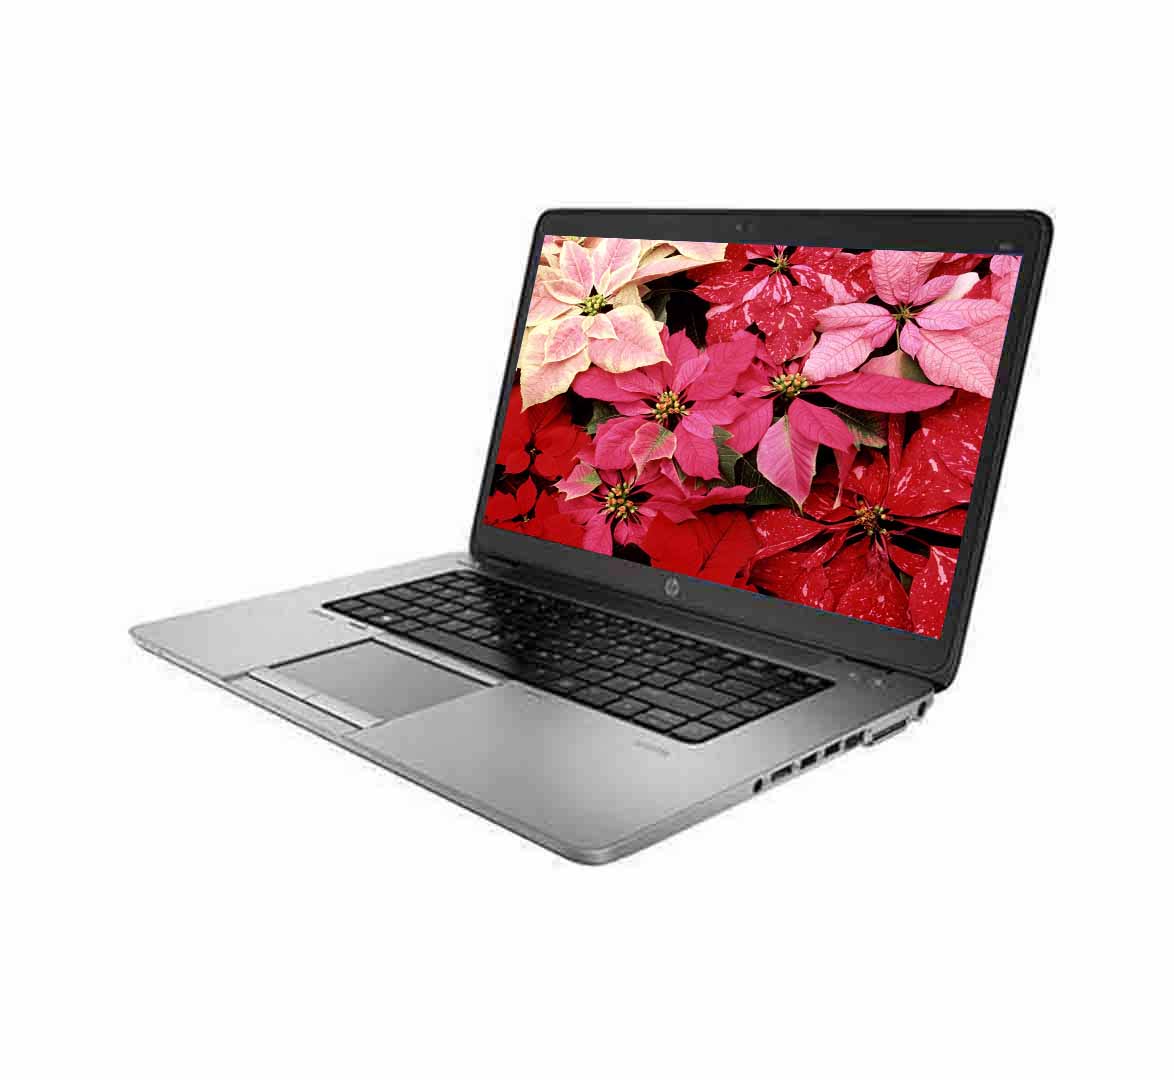 HP EliteBook 850 G2 Business Laptop, Intel Core i7-5th Generation CPU, 8GB RAM, 256GB SSD, 15.6 inch Display, Windows 10 Pro